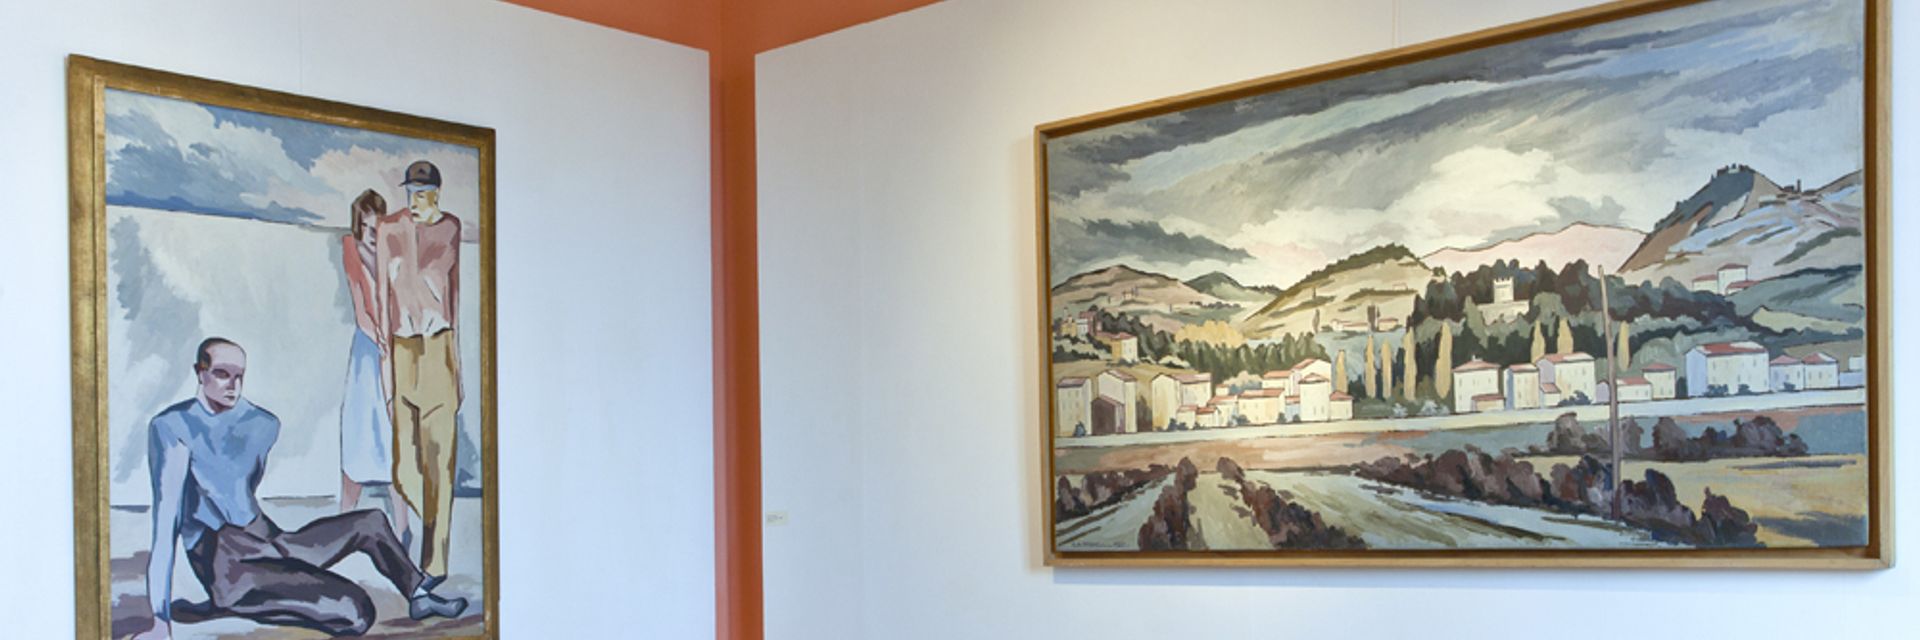 Municipal Art Gallery of Contemporary Art Antonio Sapone of Gaeta